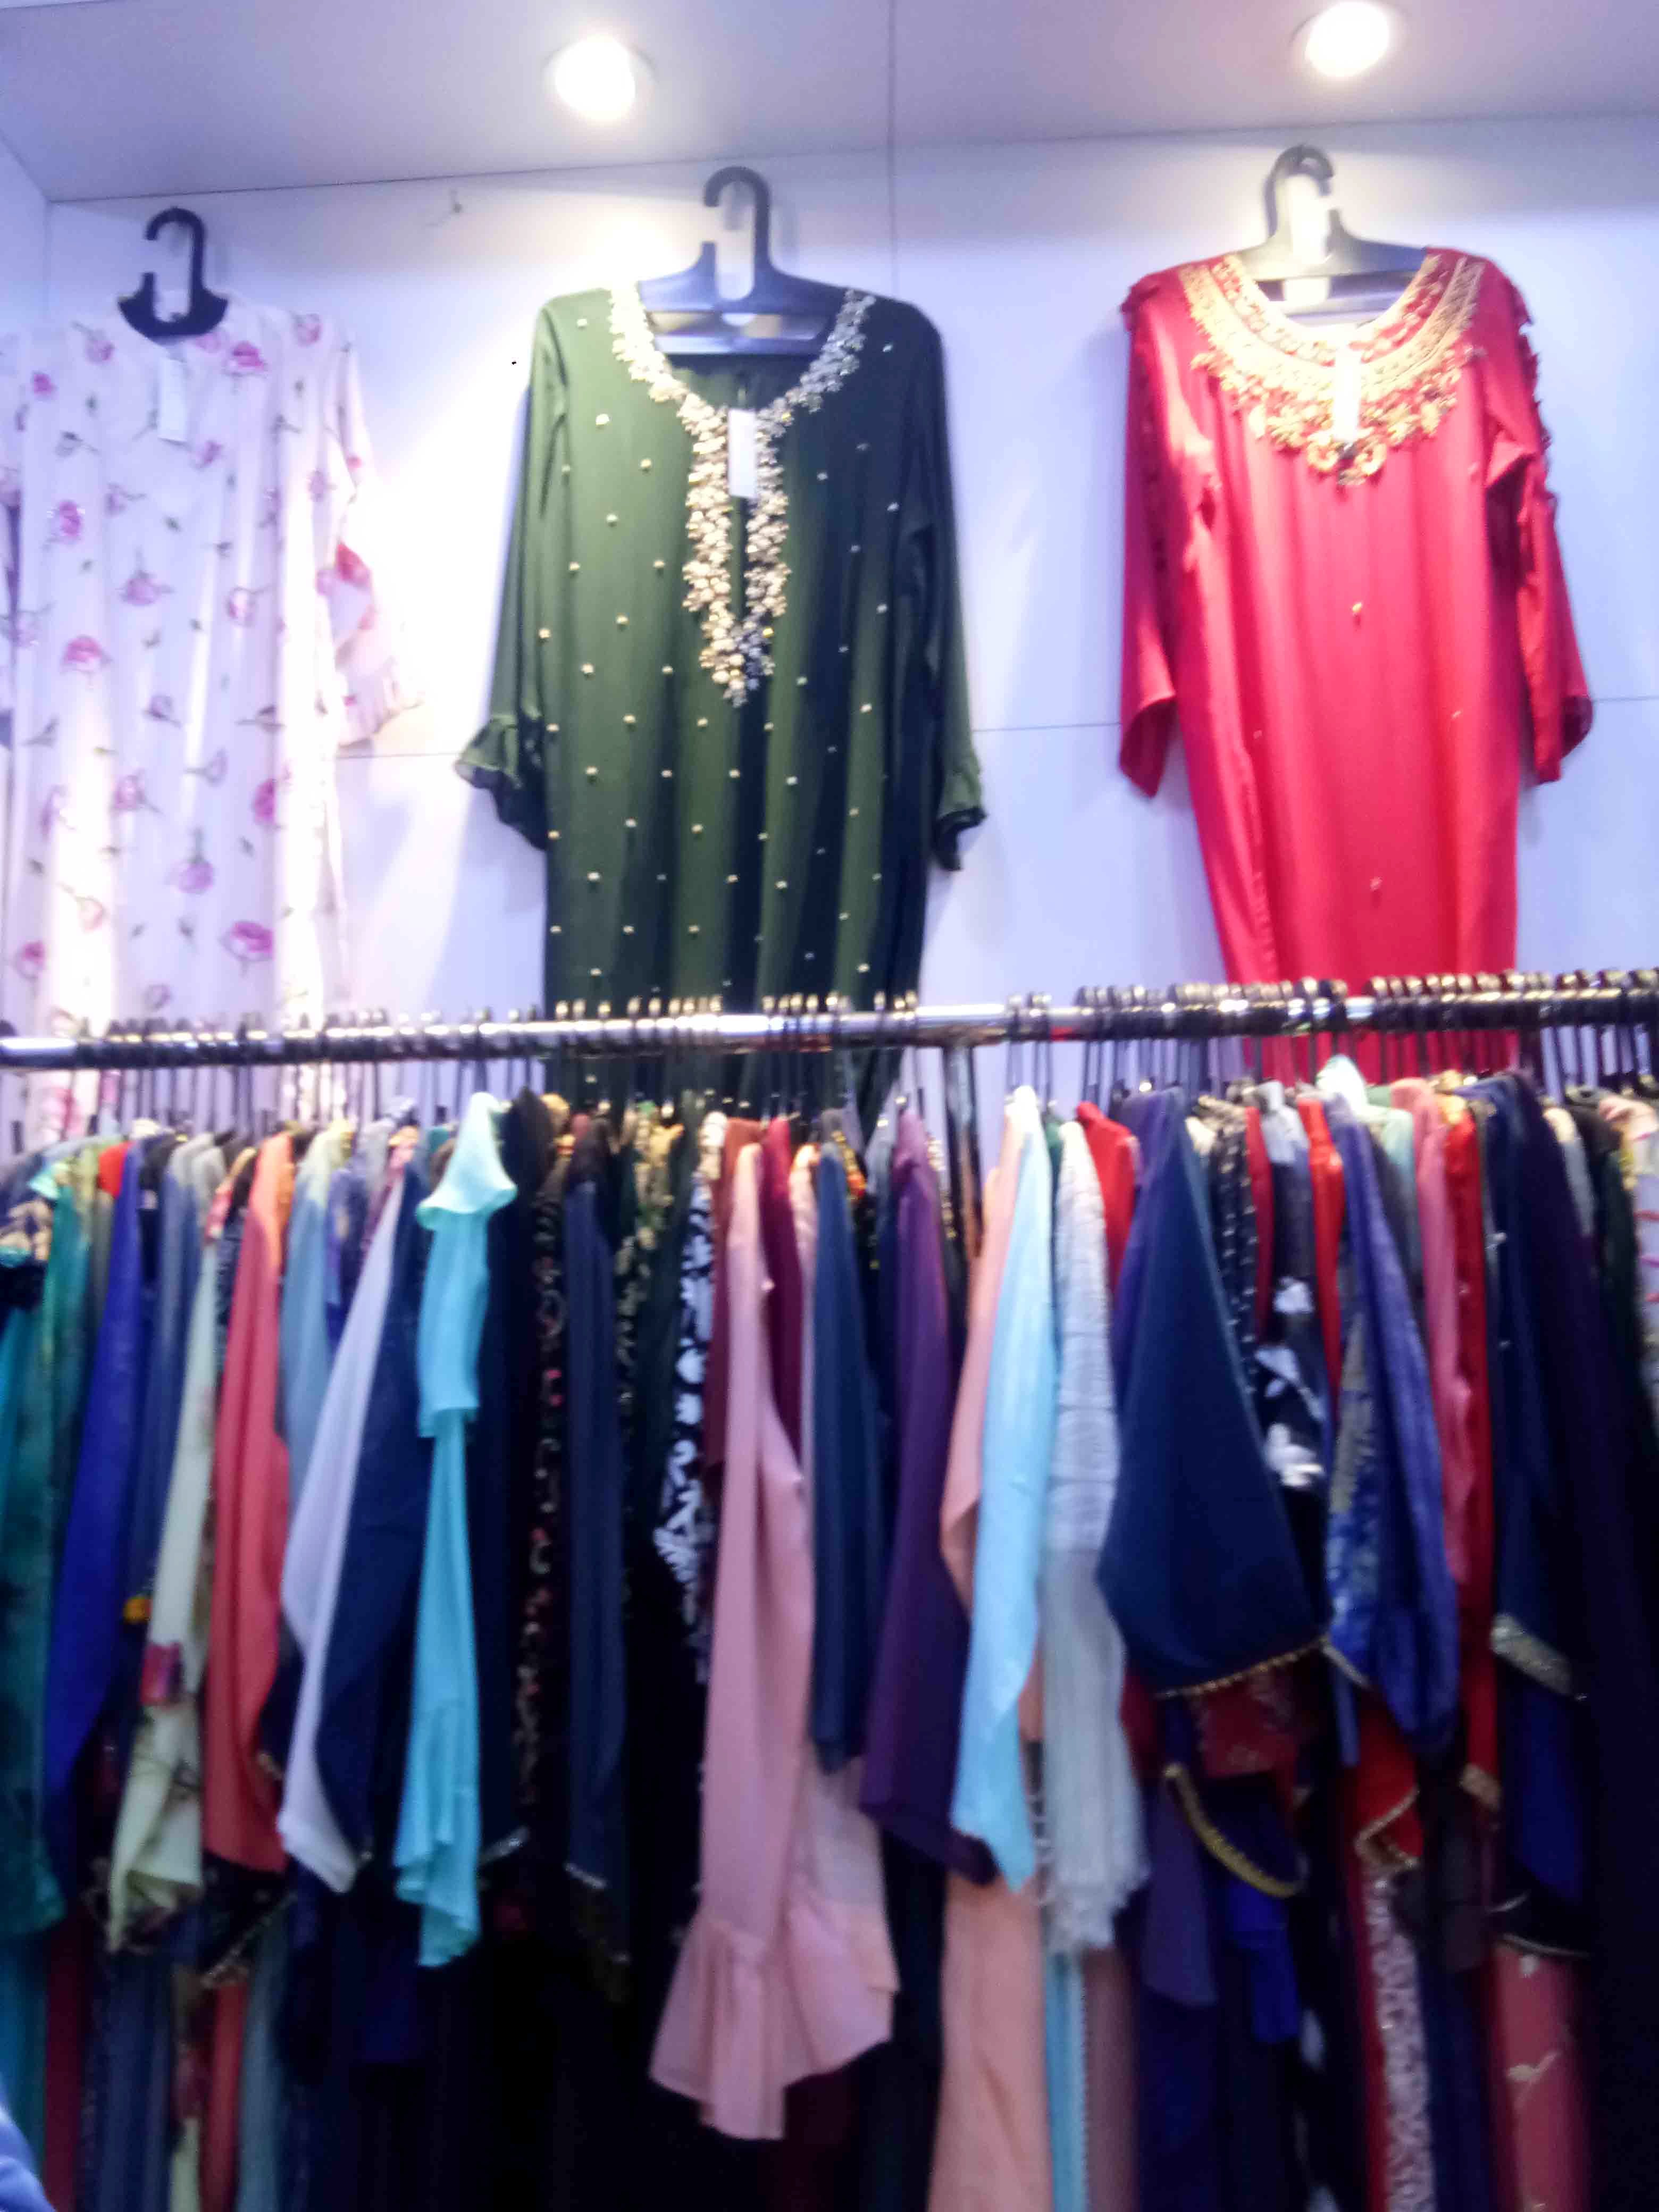 Boutique,Clothing,Clothes hanger,Dress,Room,Fashion,Outerwear,Textile,Outlet store,Retail